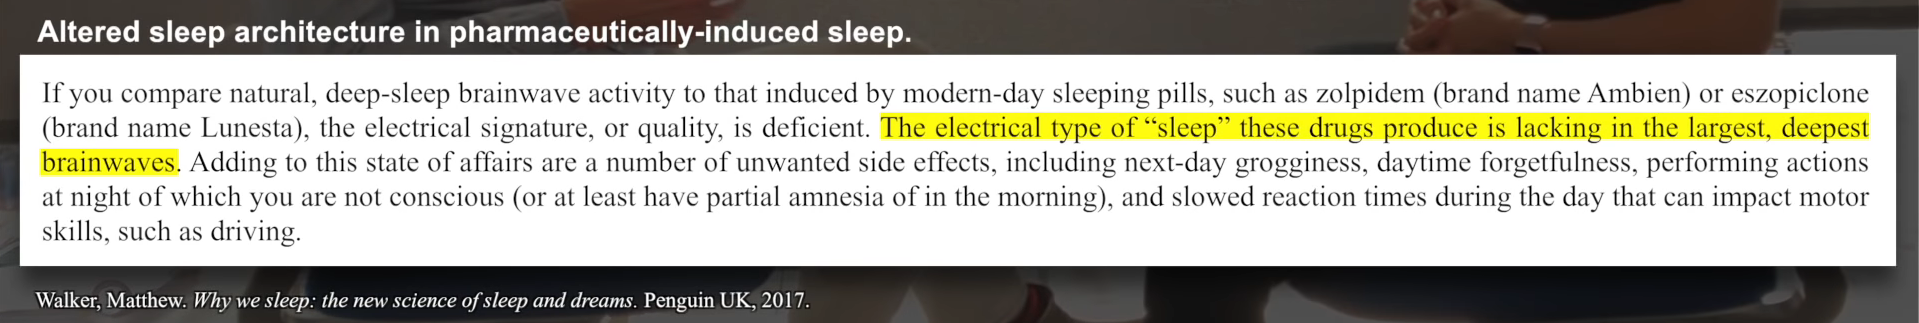 altered sleep architecture